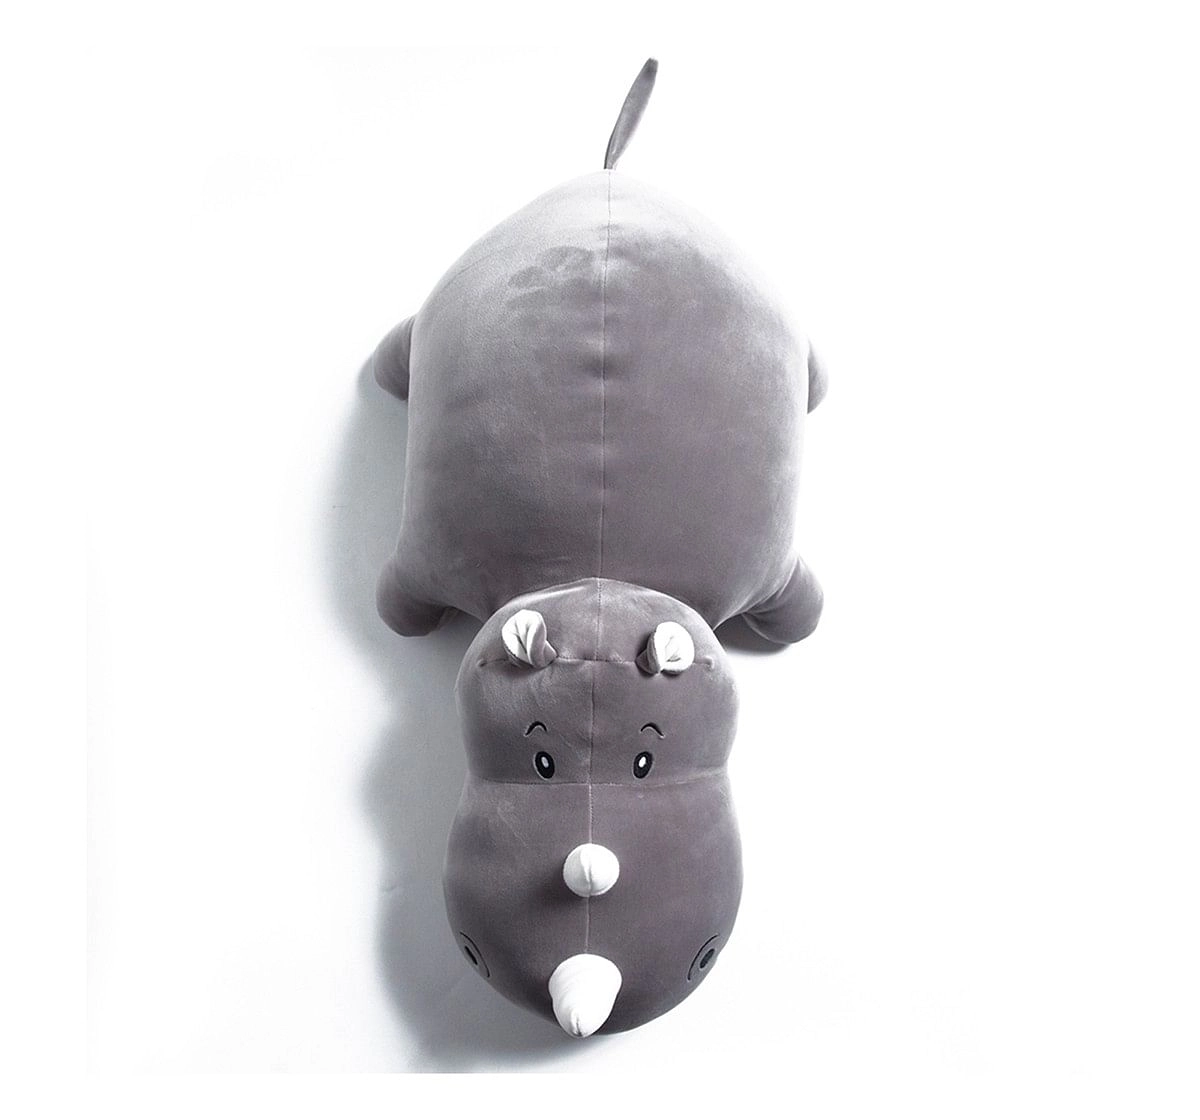 Hamleys Super Soft Plush Resting Rhino Quirky Soft Toys for Kids age 0M+ - 20 Cm (Grey)